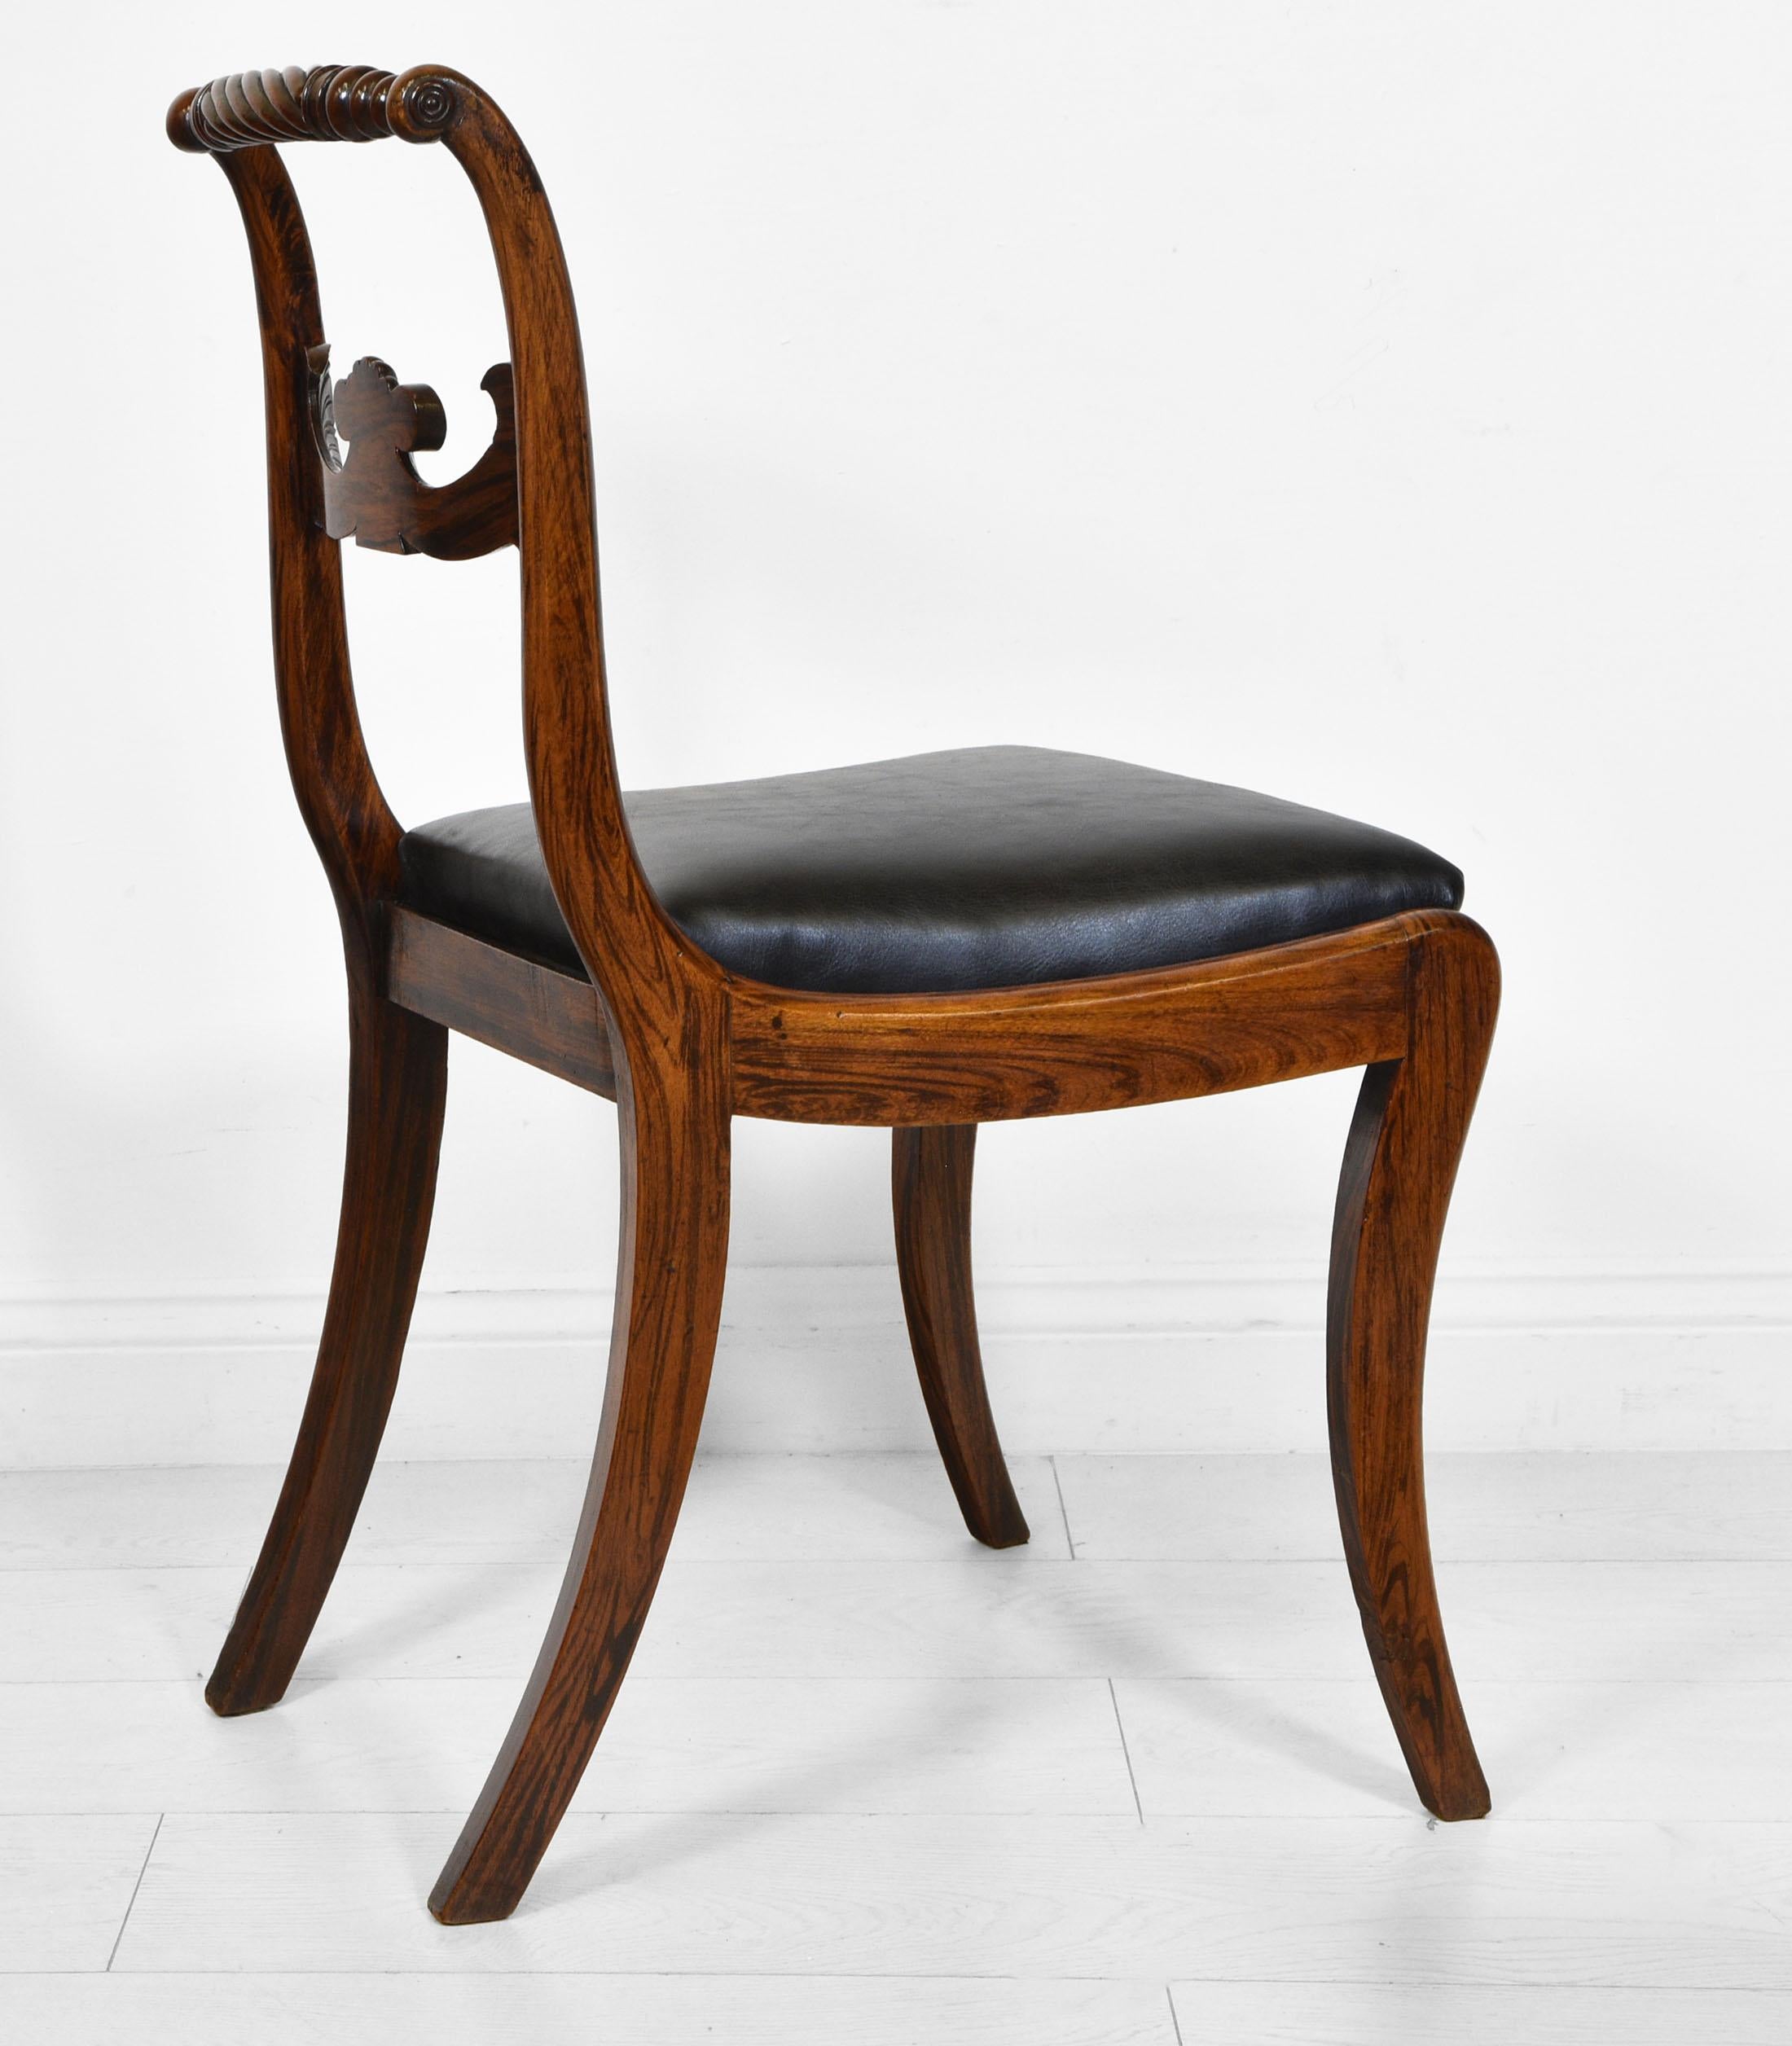 Paar Trafalgar-Stühle aus Rosenholz und Leder im Regency-Stil, um 1820 (19. Jahrhundert) im Angebot